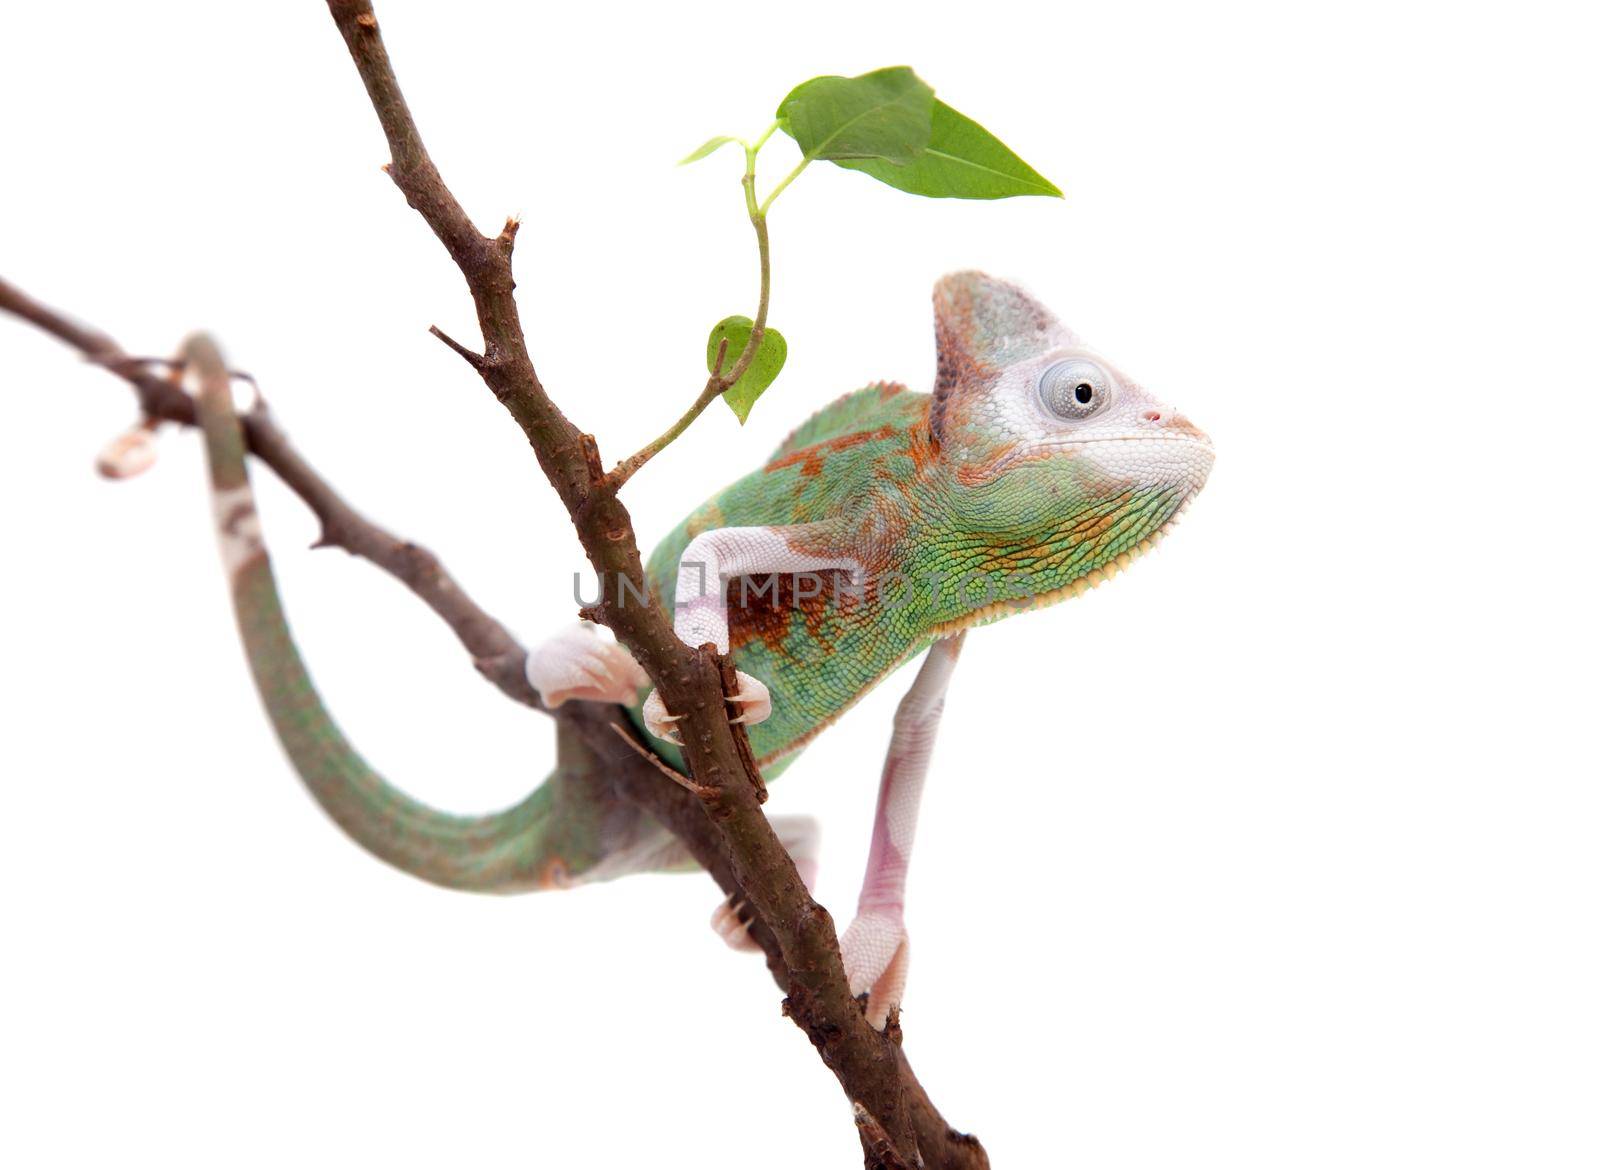 The veiled chameleon piebald, Chamaeleo calyptratus, male by RosaJay